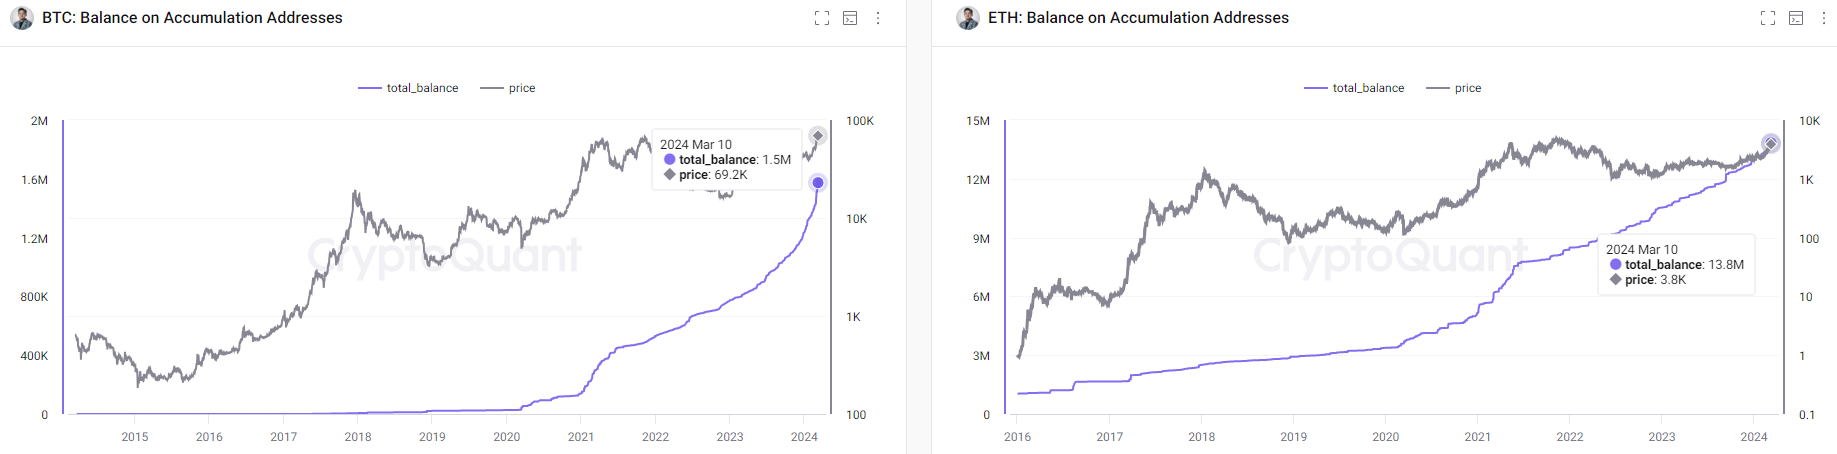 BTC-ETH Balances